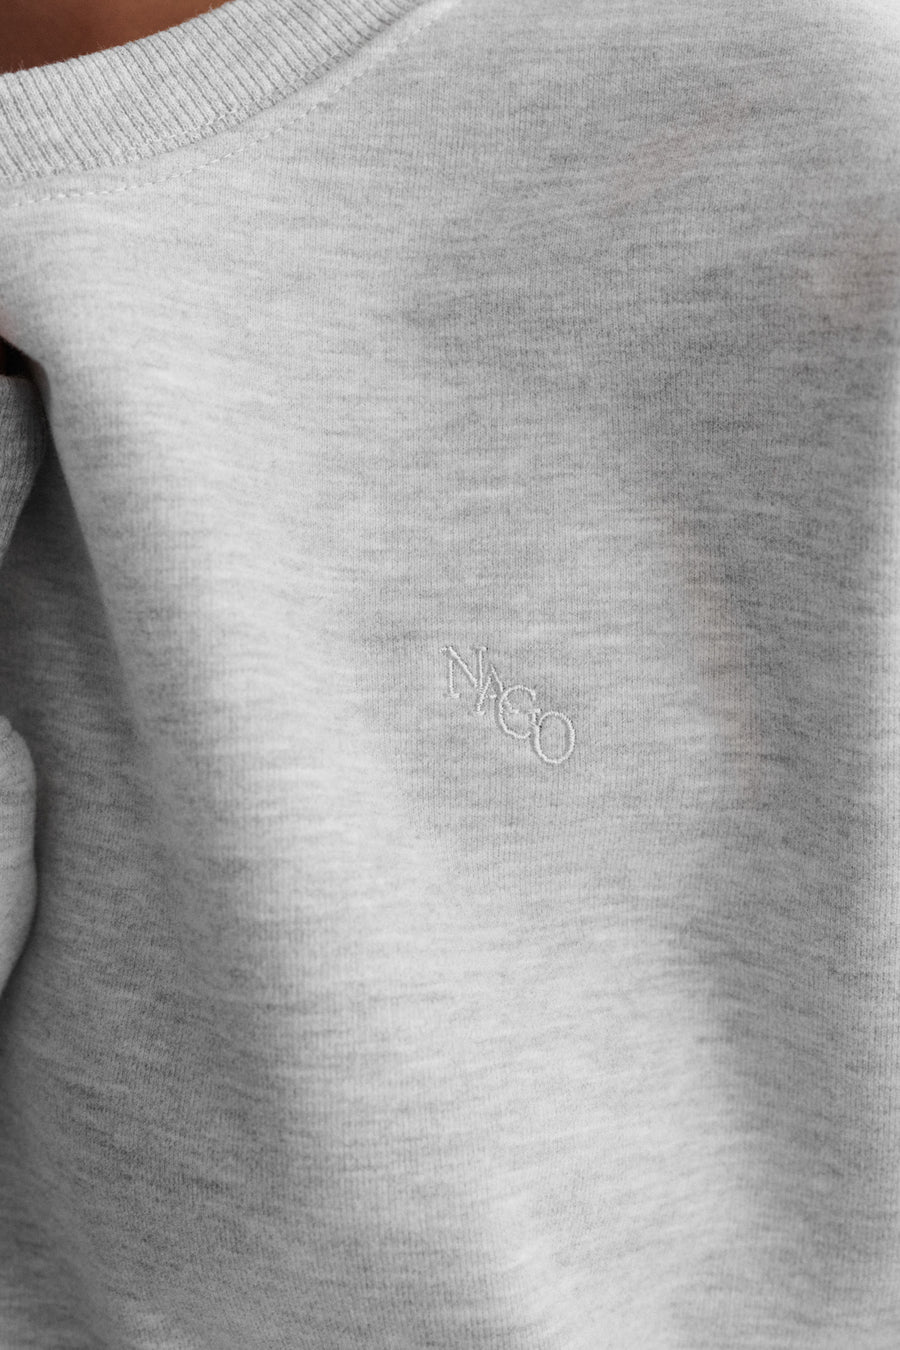 Sweatshirt in cotton / 17 / 16 / mist grey / monogram